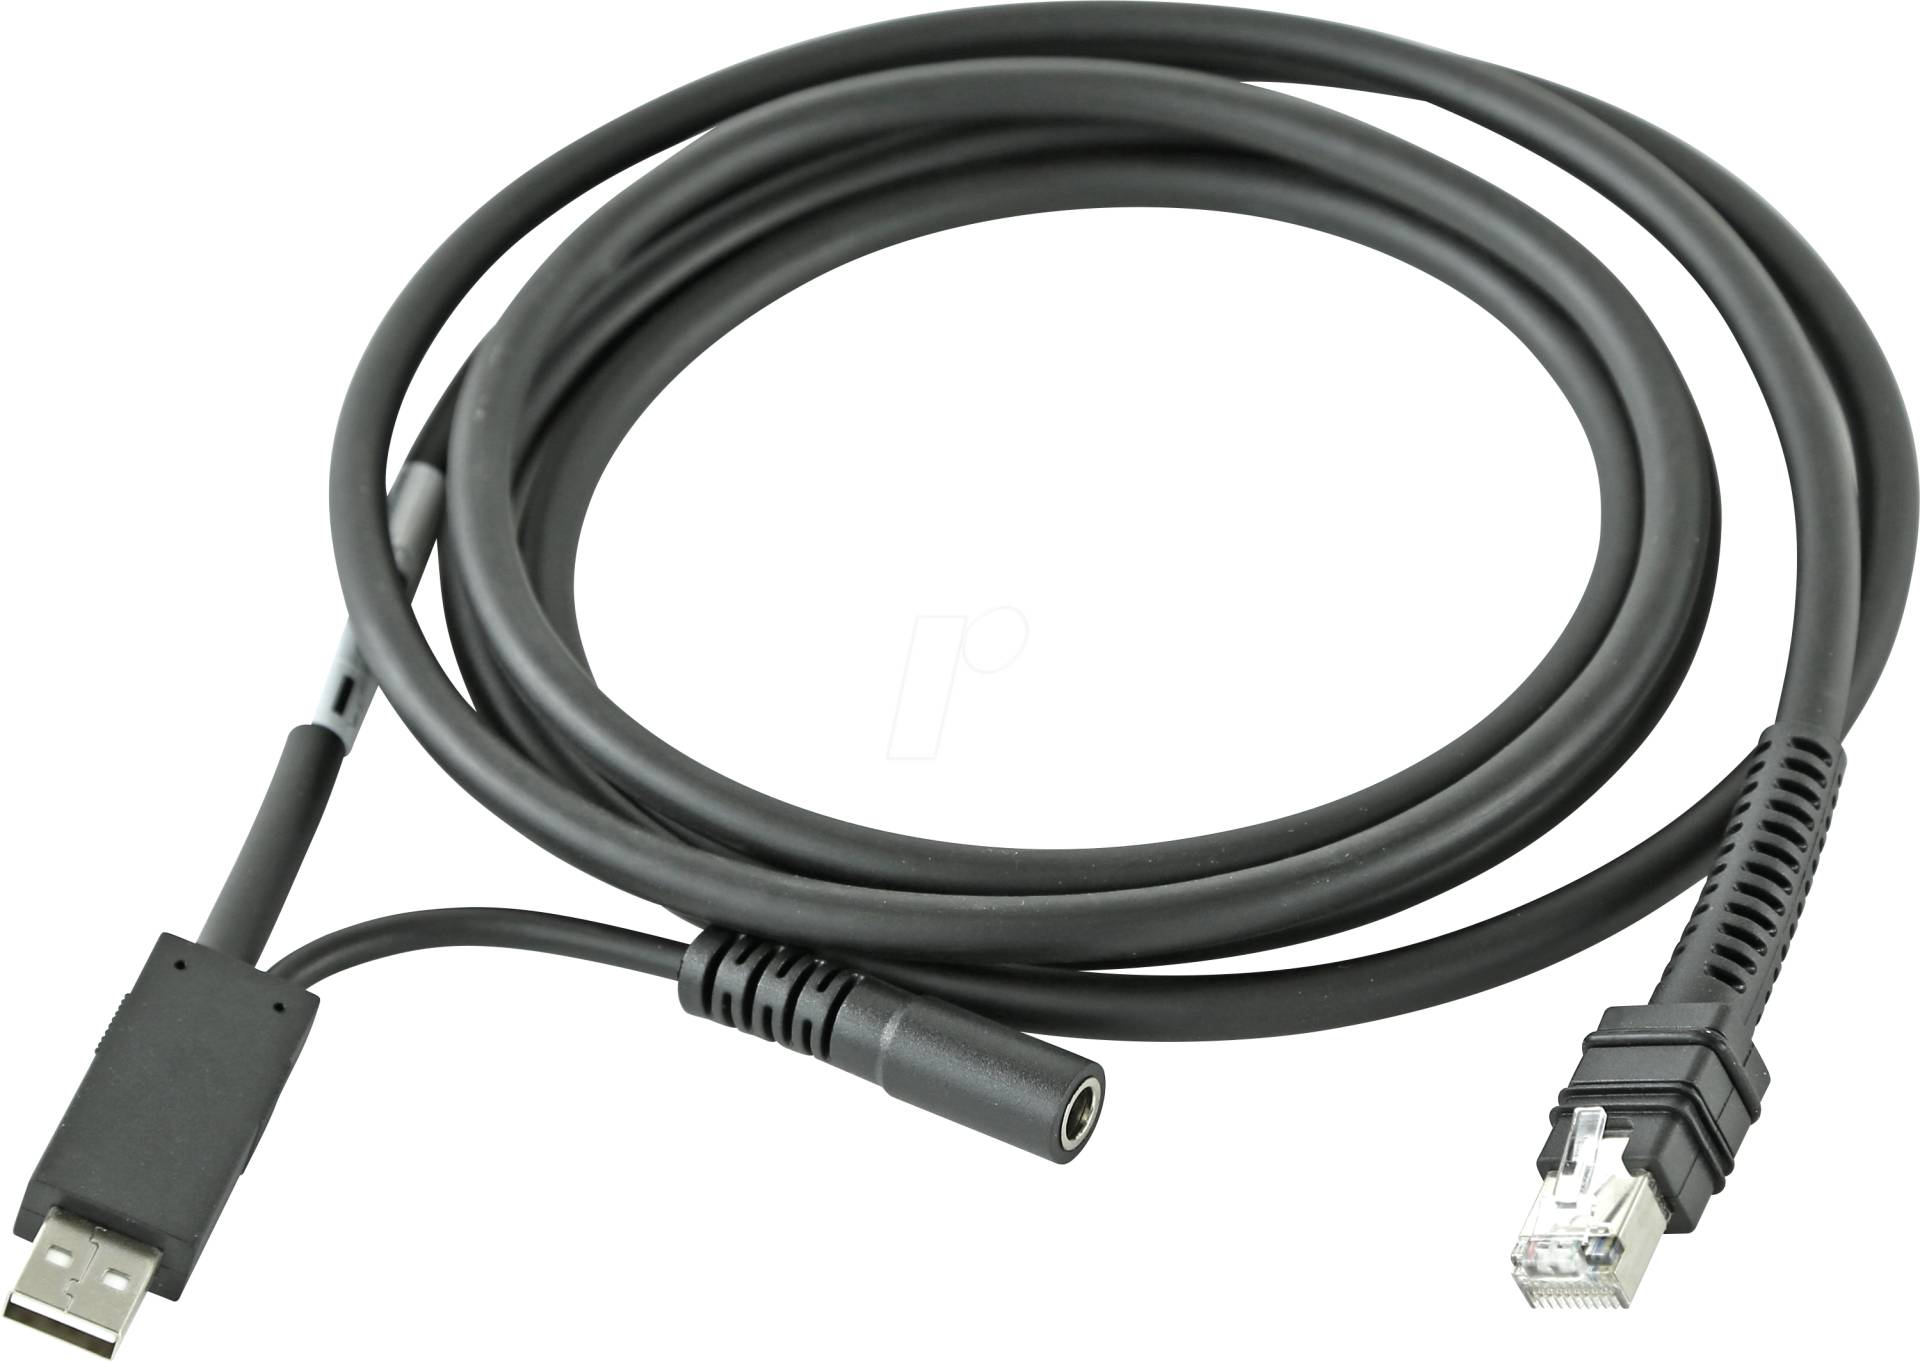 ZEBRA U42-S07PAR - Barcodescanner, Kabel, USB, gerade, geschirmt, NT-Anschluss, 2 m von Zebra